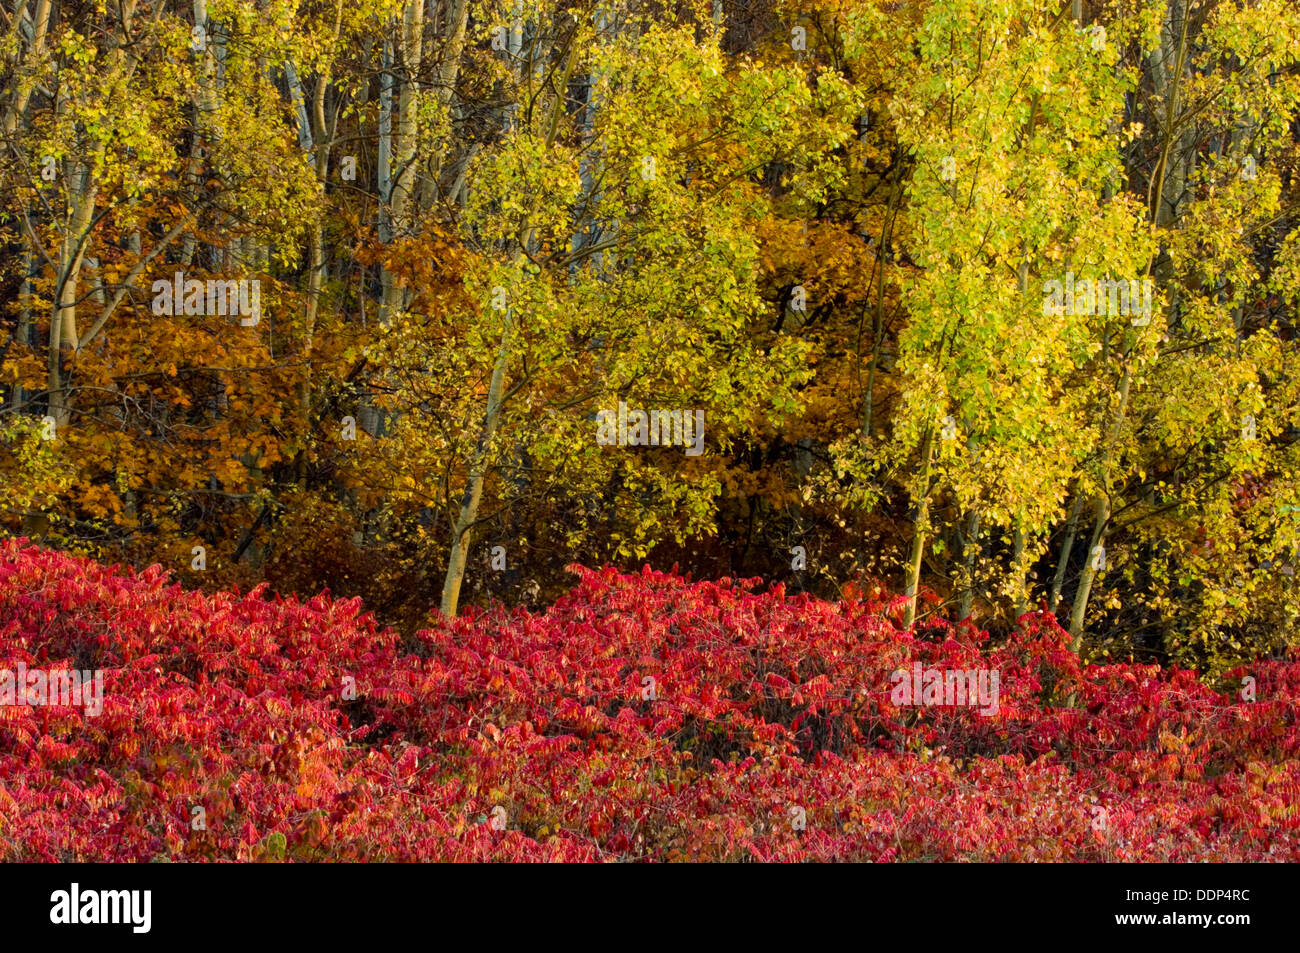 Autumn foliage on aspen trees and staghorn sumac shrubs Stock Photo